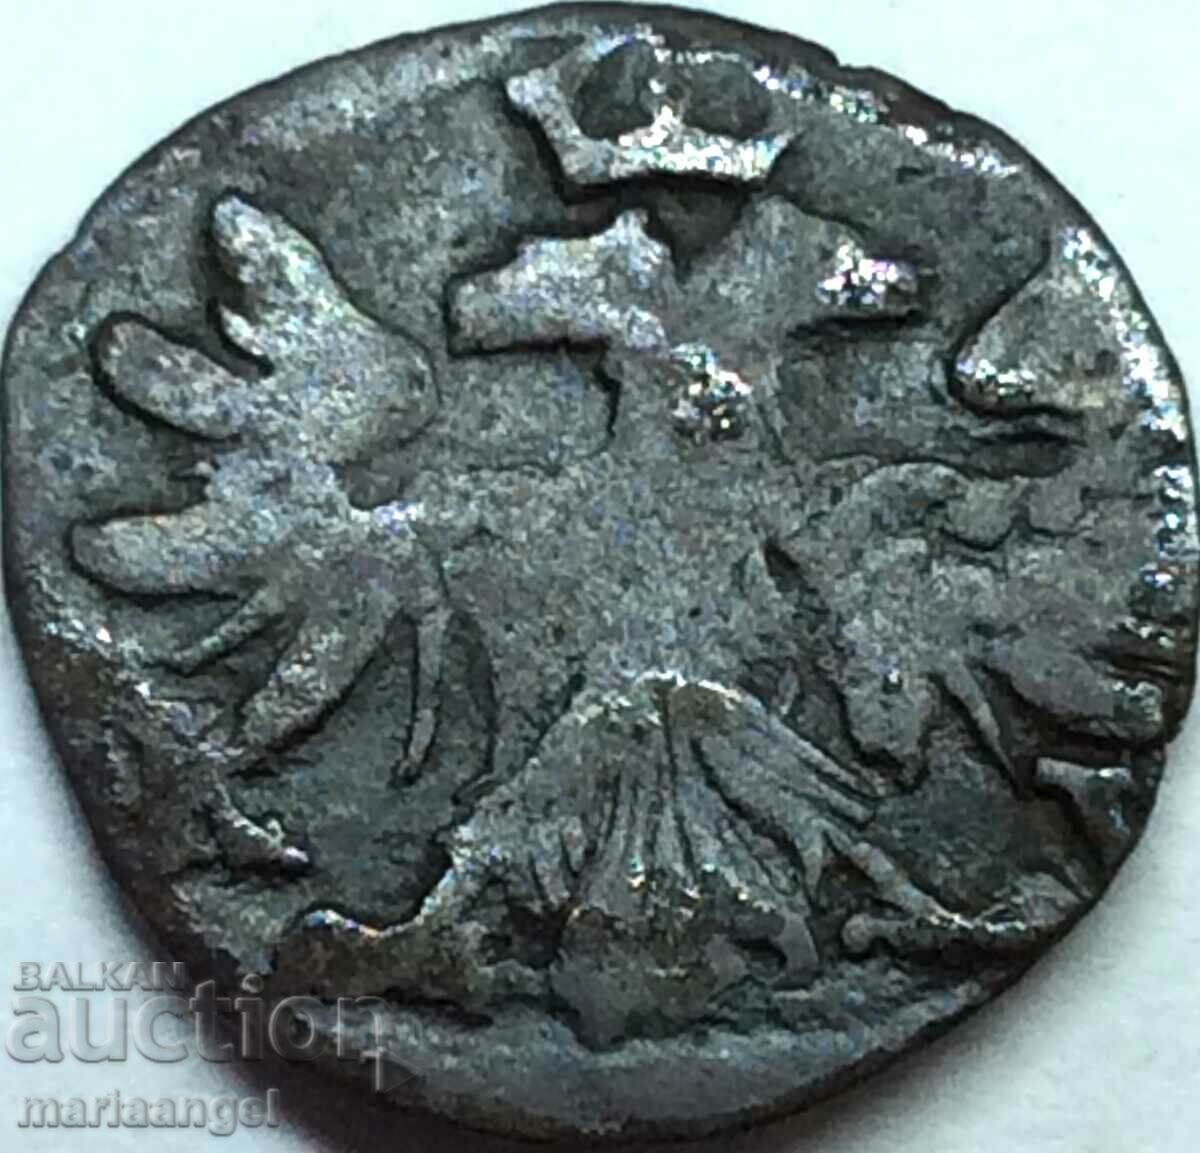 Charles V Habsburg Triline Italy Milan Crowned Eagle